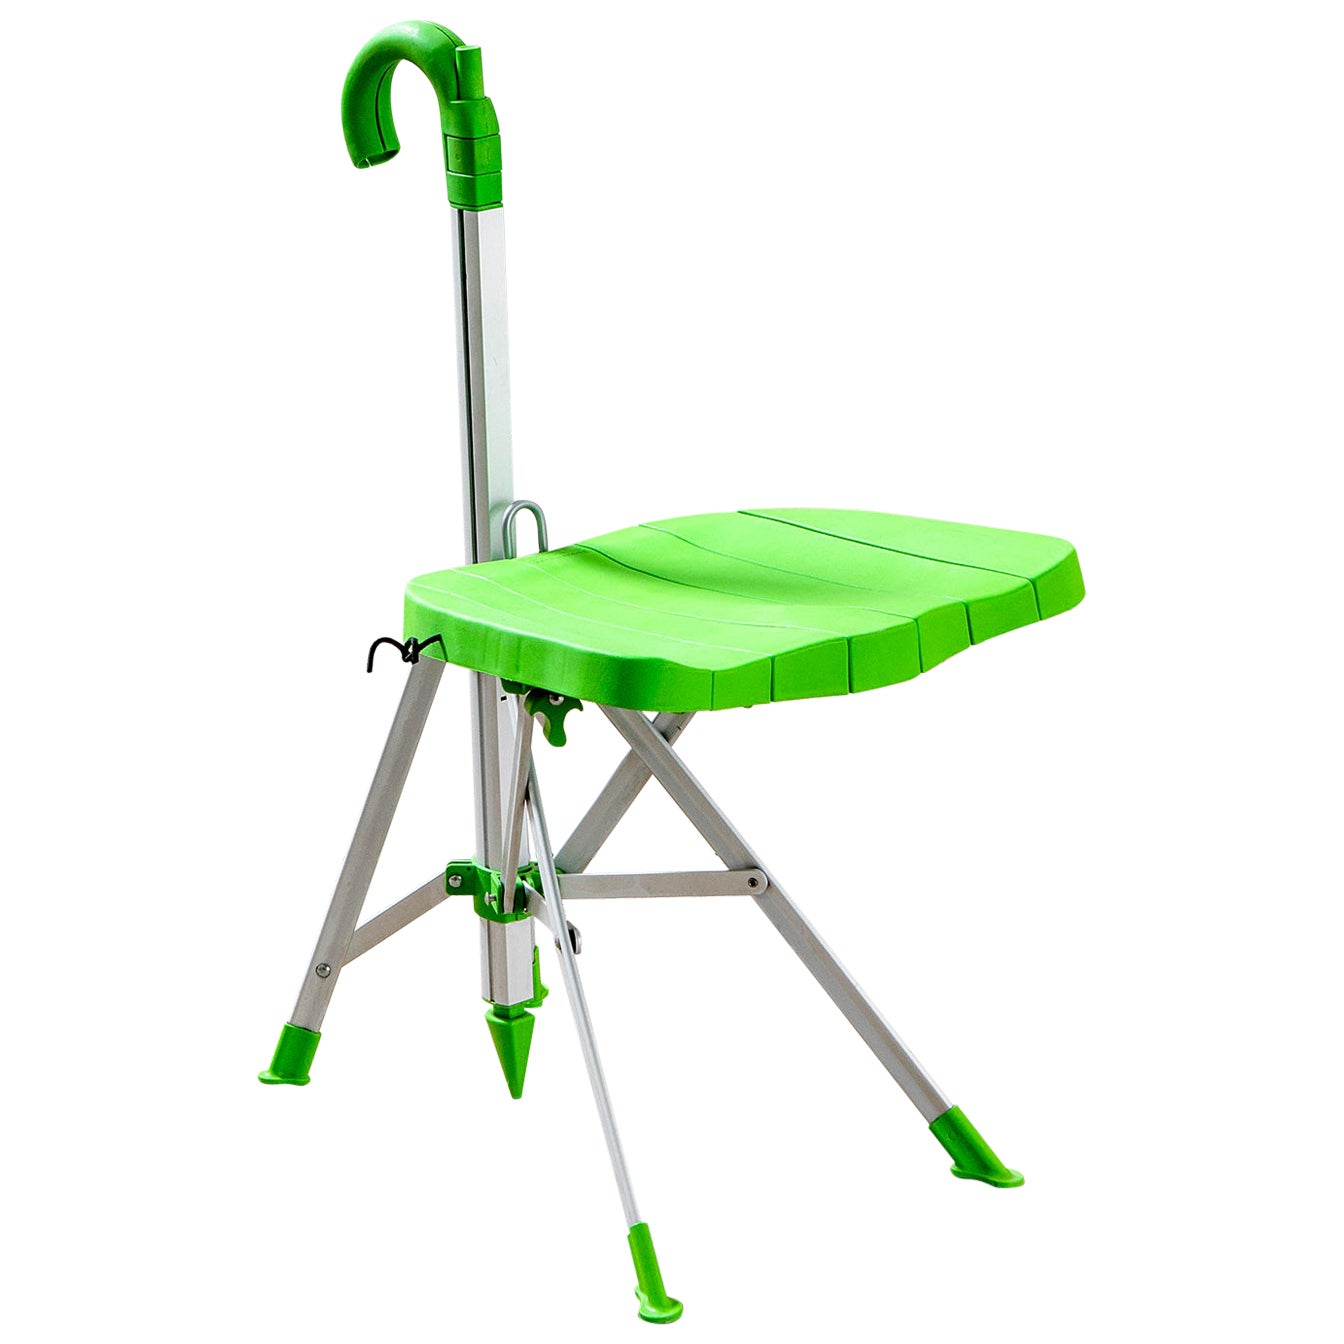 20th Century Gaetano Pesce Umbrella Chair Folding and Transportable Green